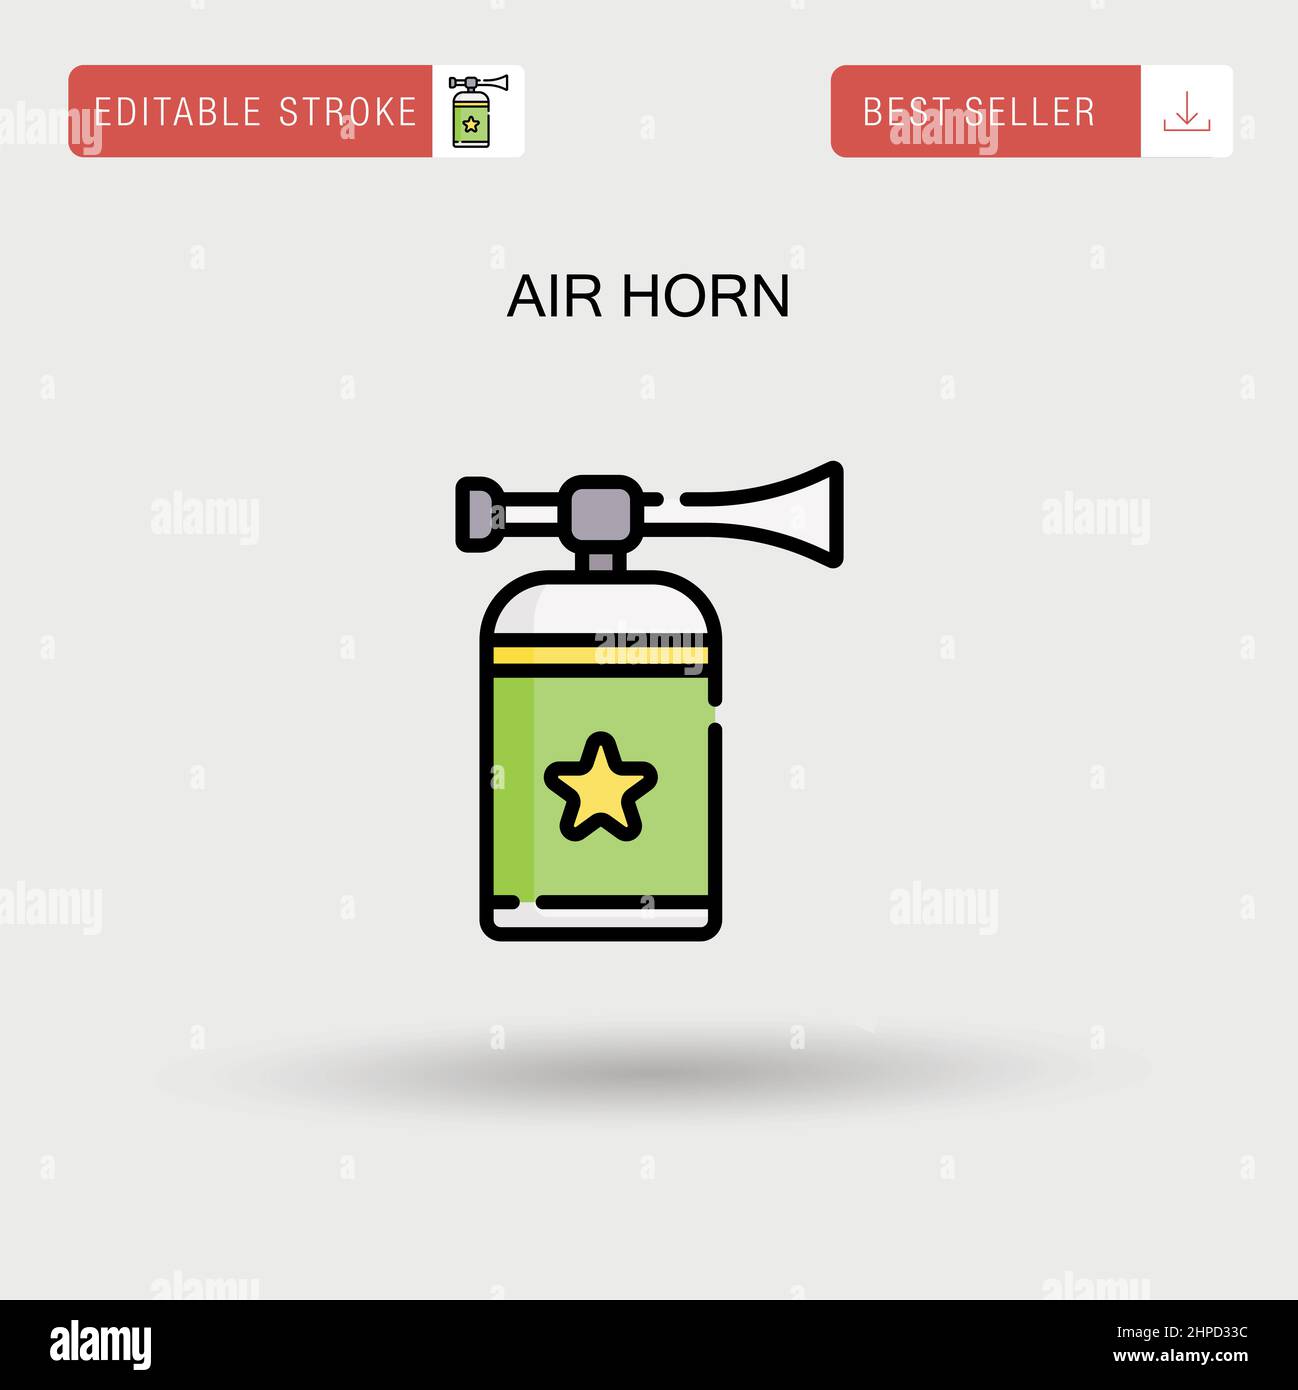 Air horn Stock-Vektorgrafiken kaufen - Alamy